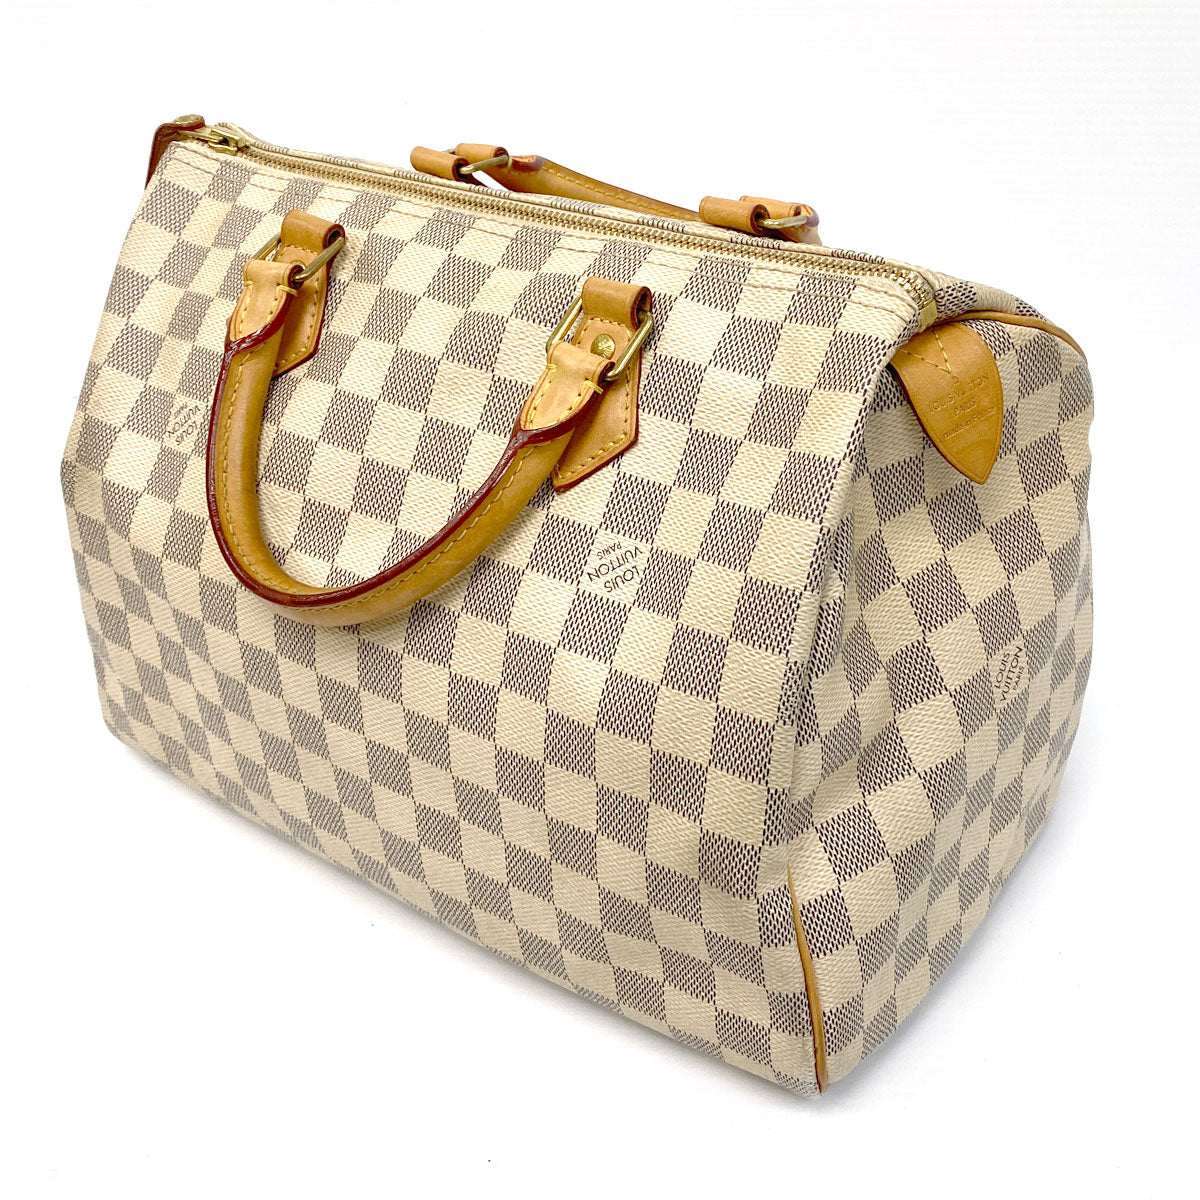 Authentic LOUIS VUITTON Speedy 30 Damier Azur Boston Hand Bag Purse #49899